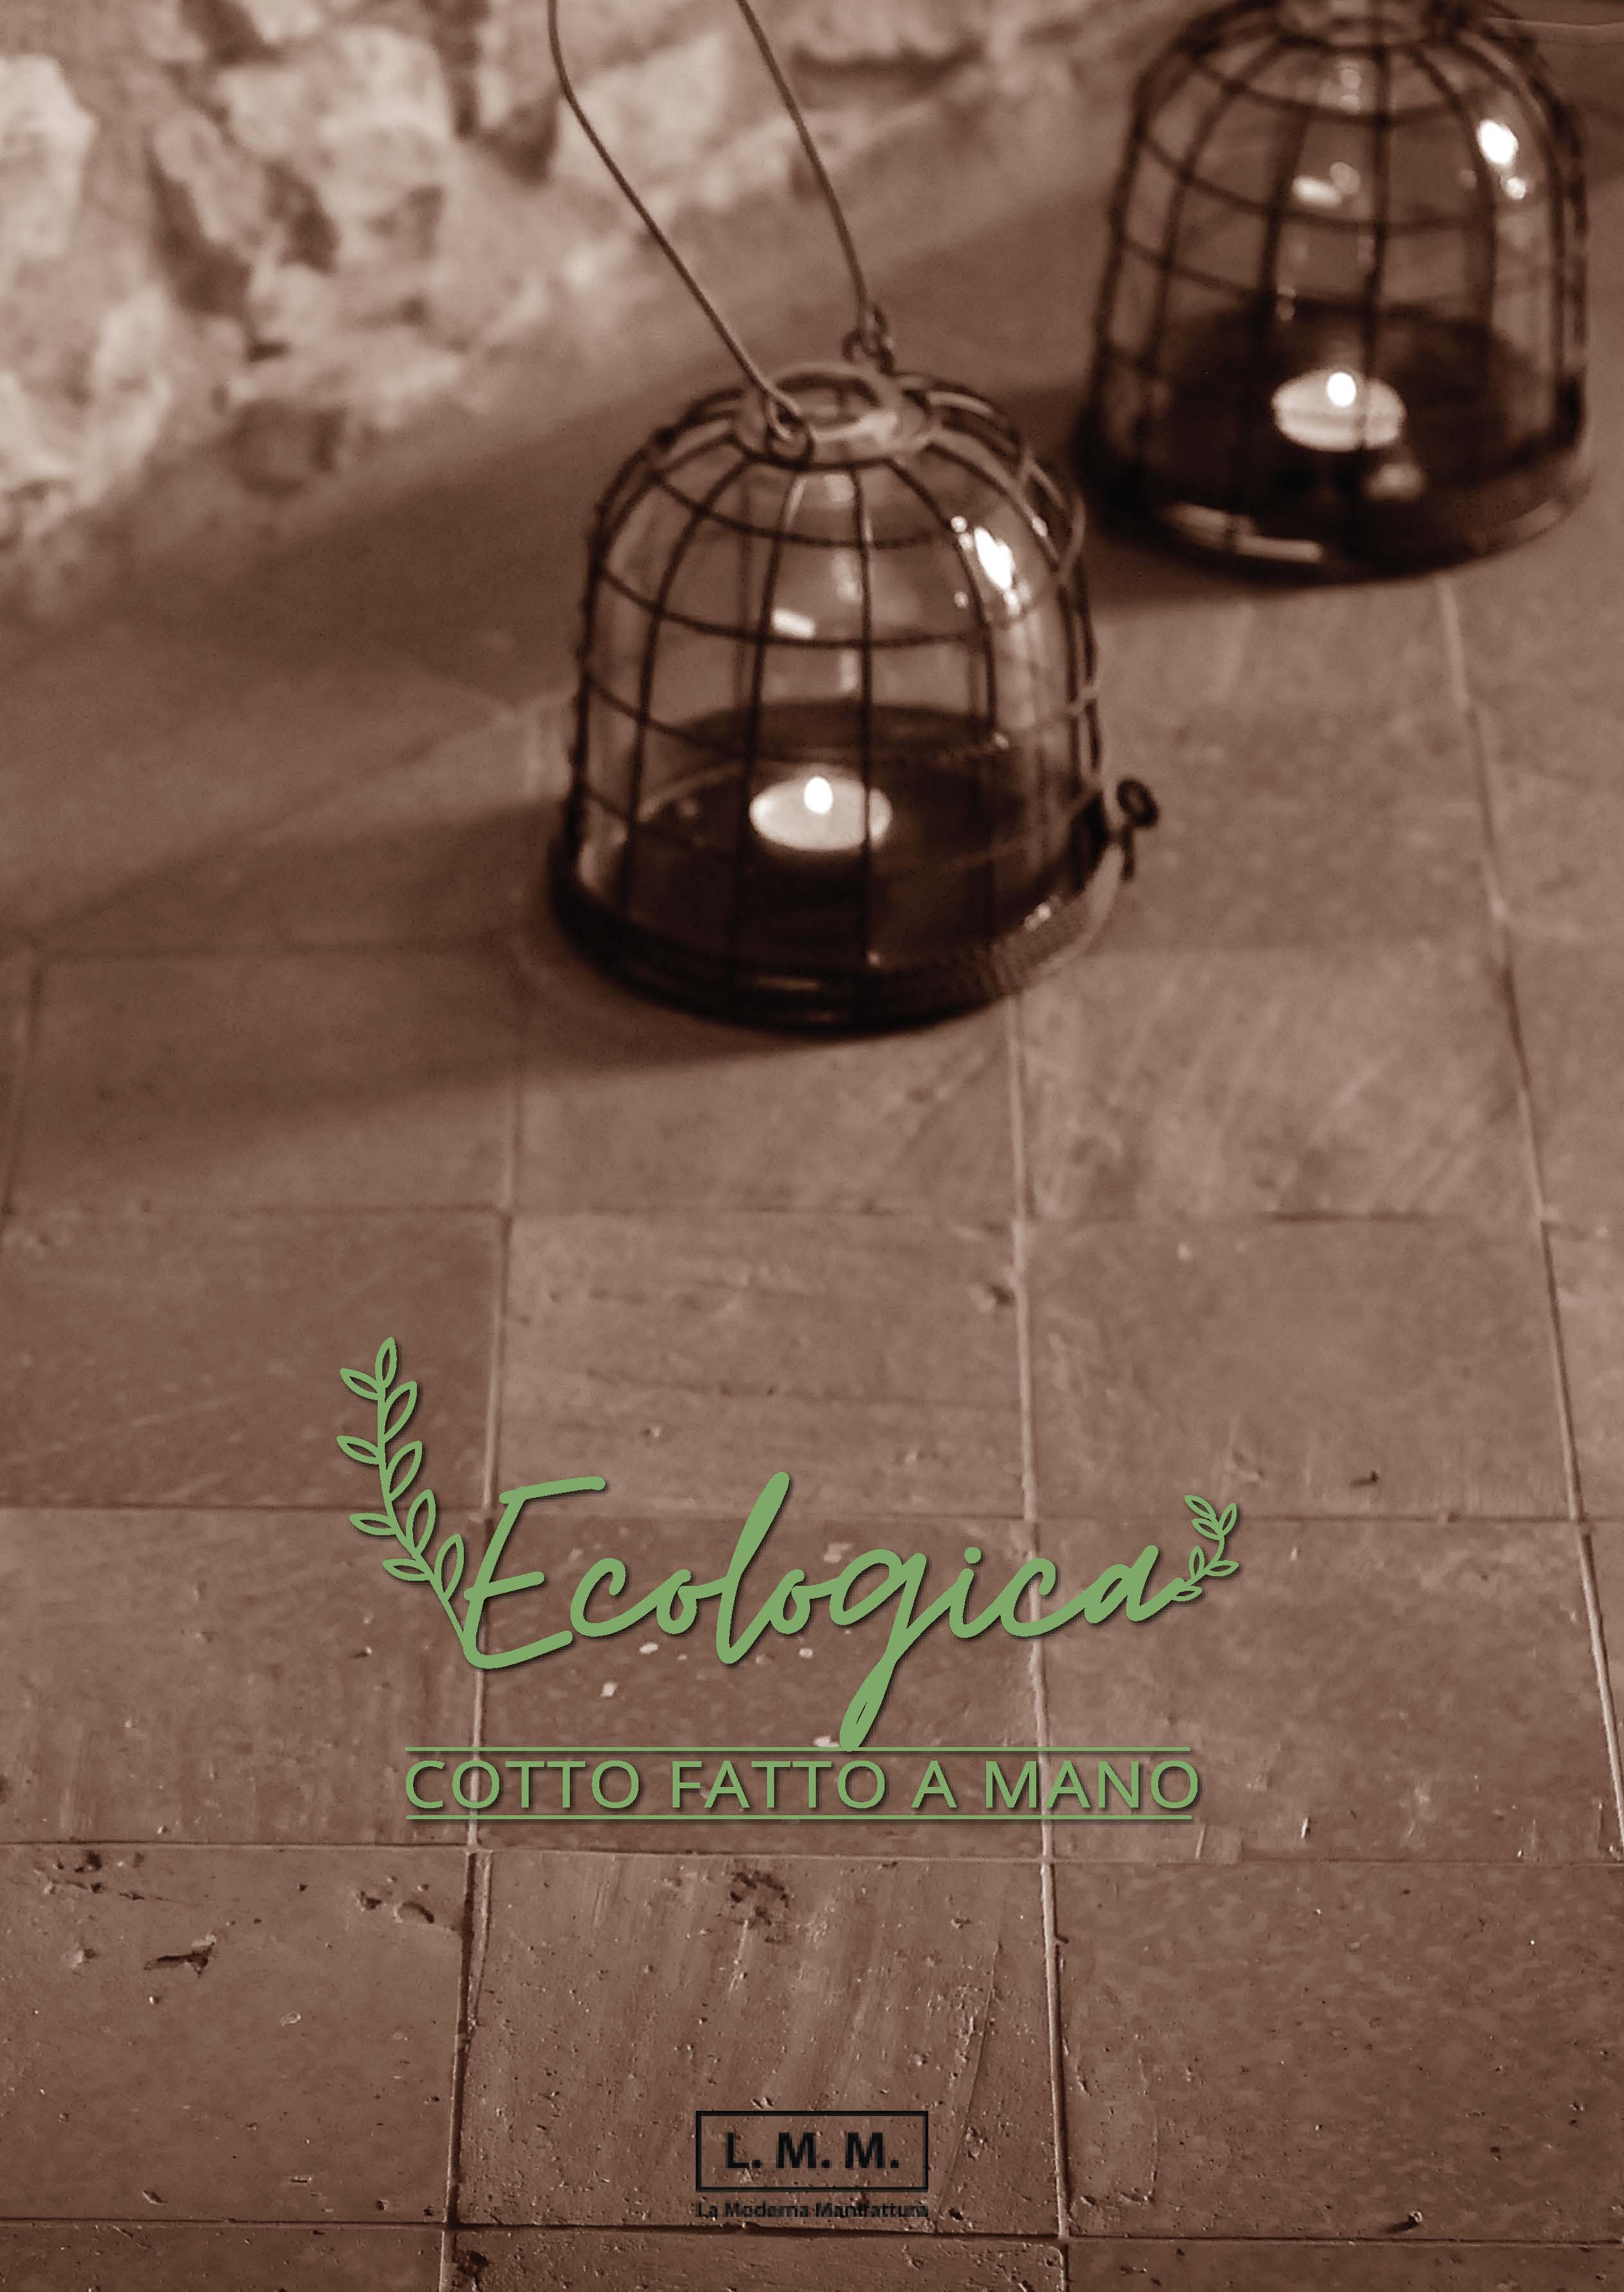 Catalogo Ecologica